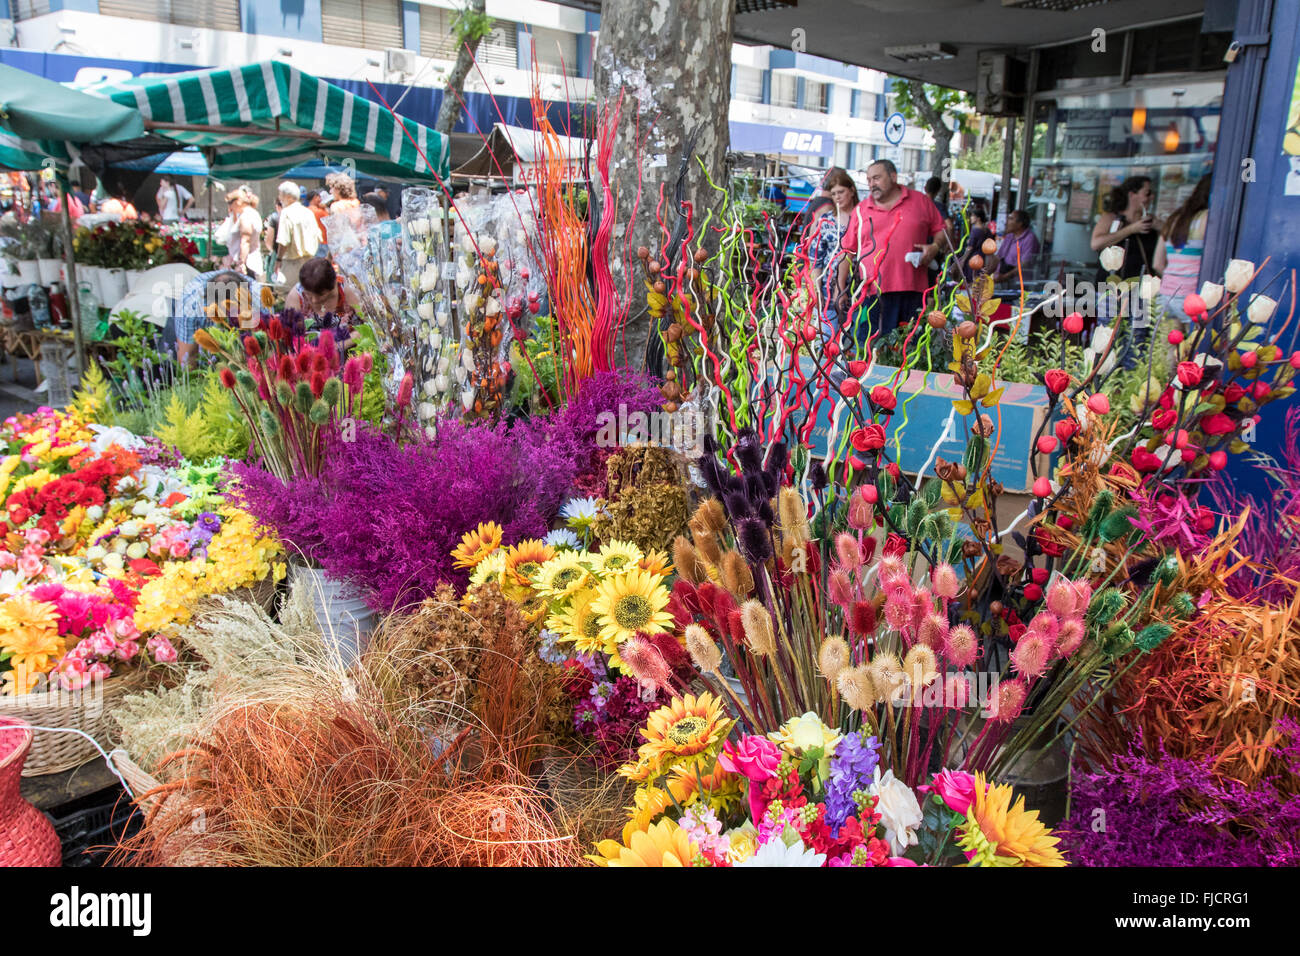 Montevideo-Markt mit bunten Trockenblumen. Montevideo, Uruguay. Stockfoto